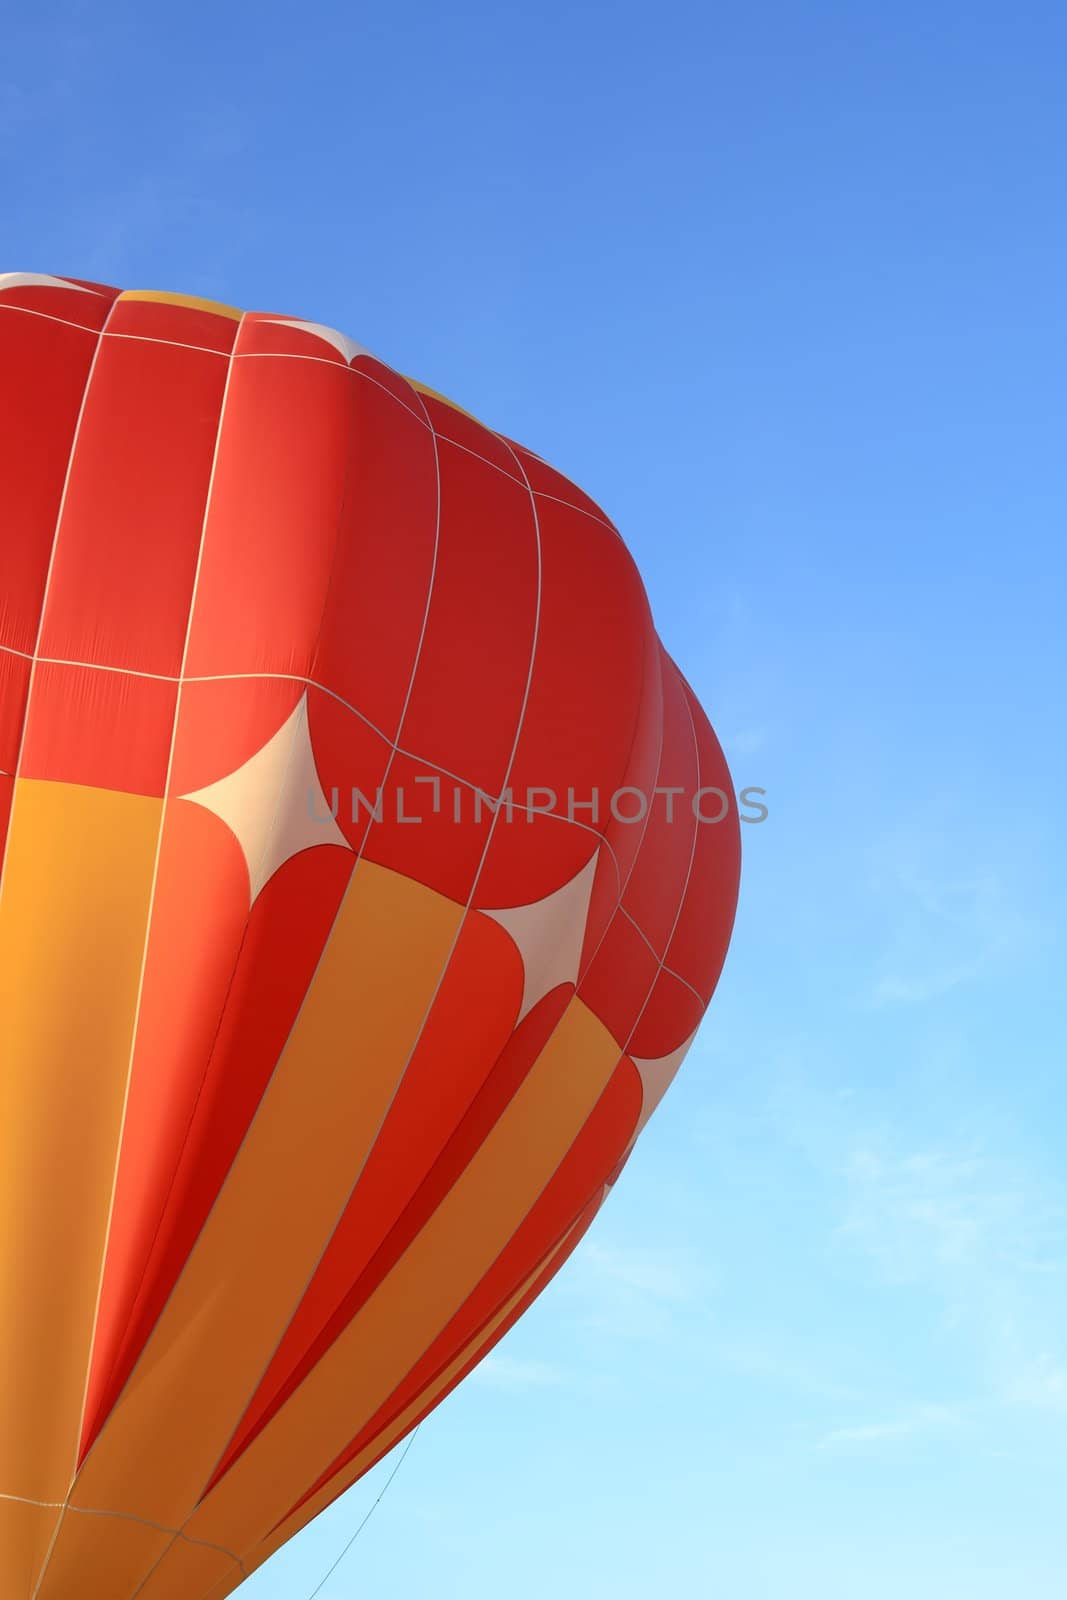 Vivid orange hot air balloon in the blue sky.